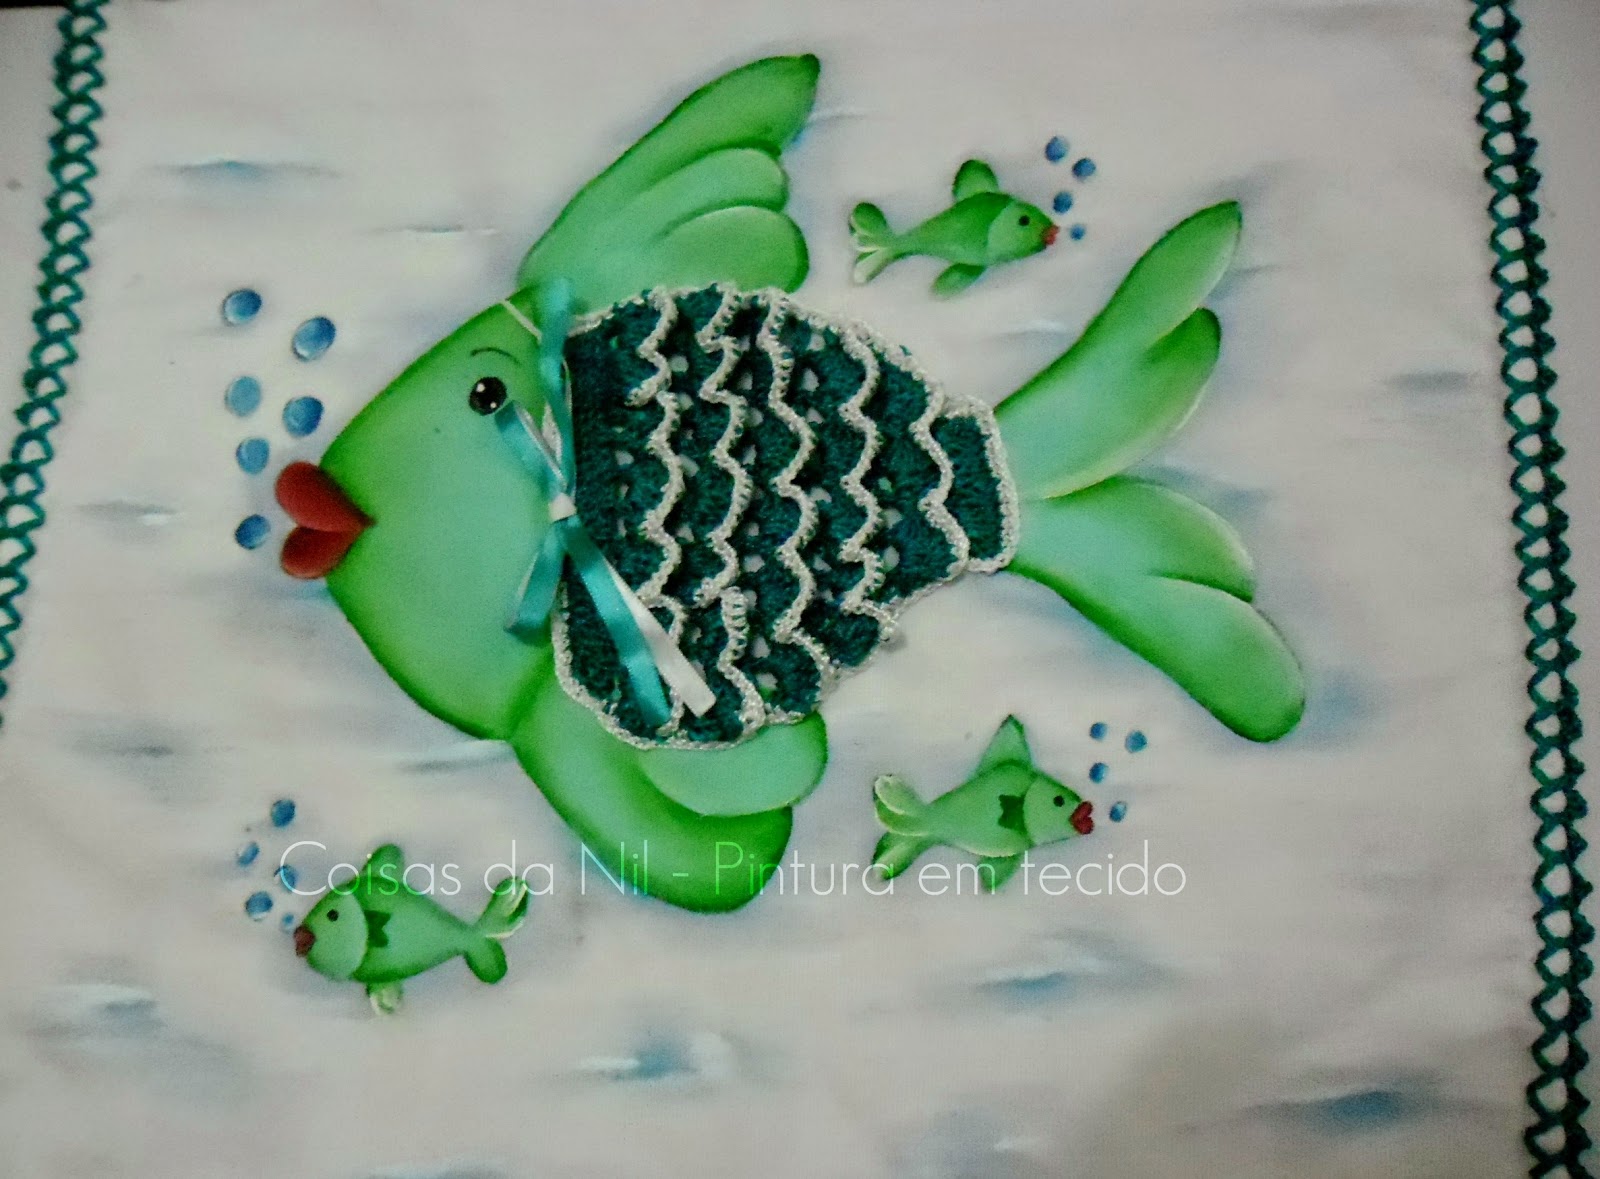 pano de copa com pintura de peixe com o corpo de croche